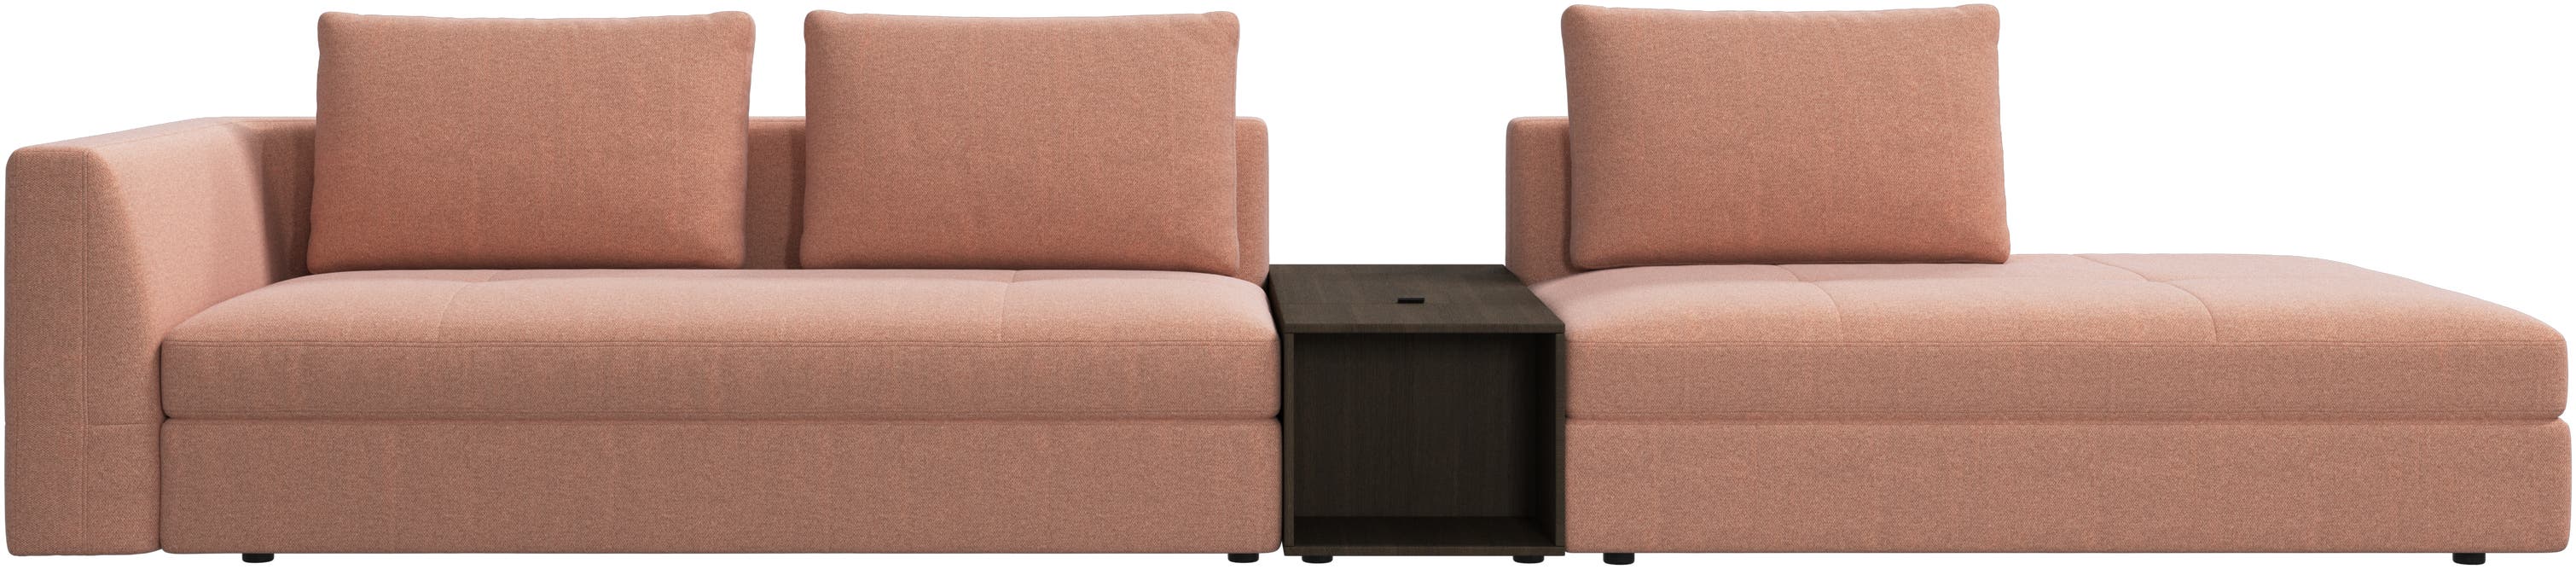 Bergamo 3 seater lounge sofa with storage